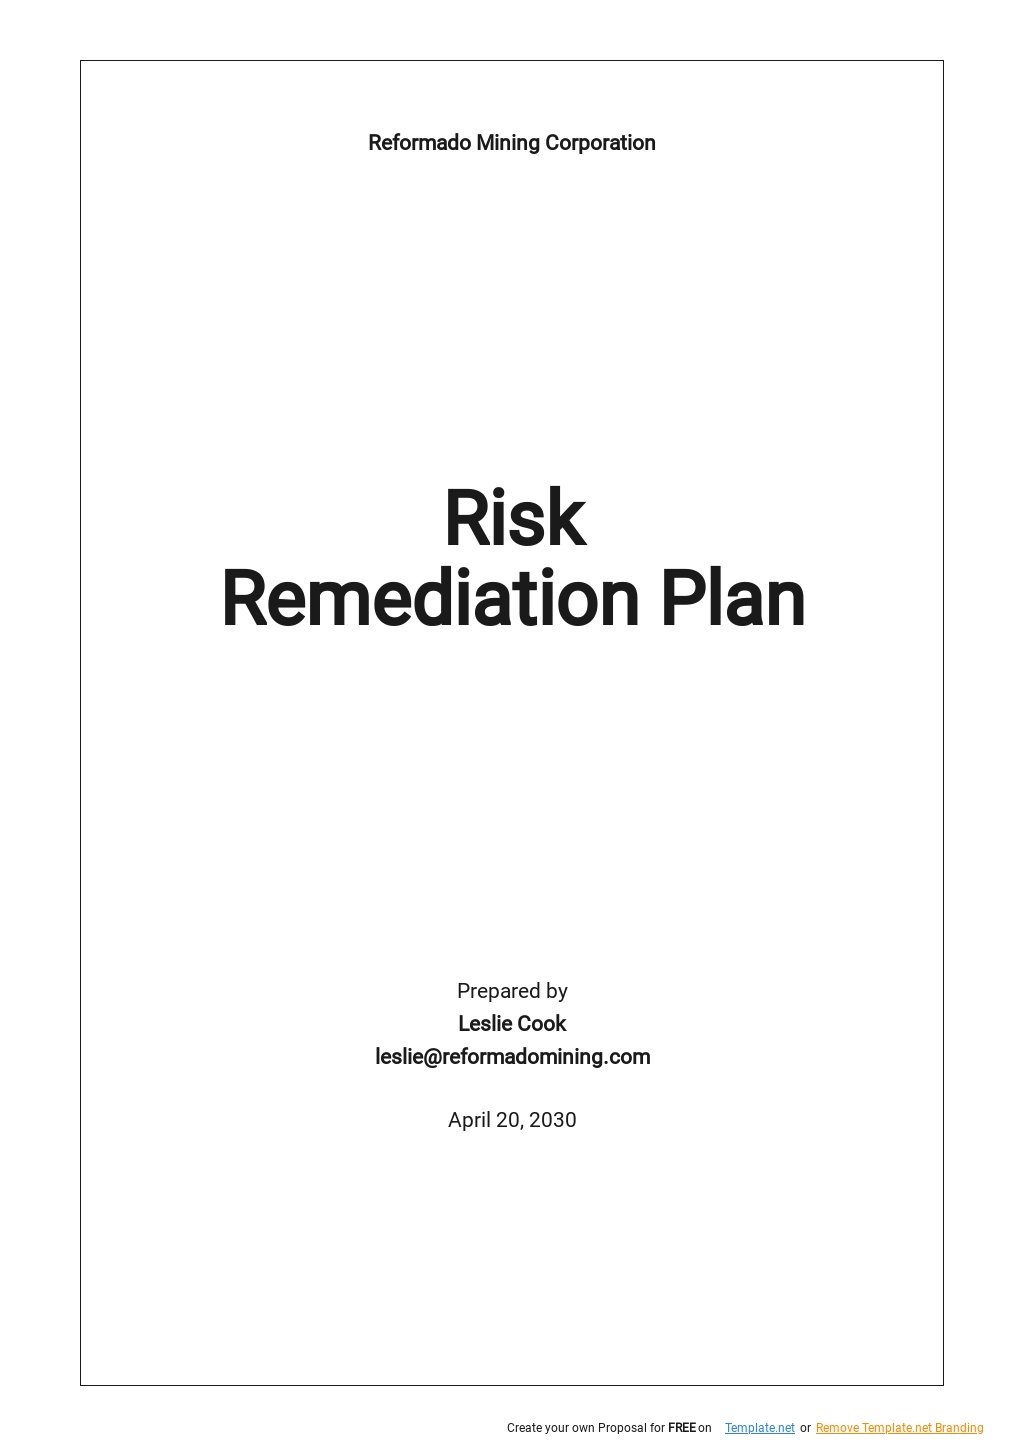 Risk Remediation Plan Template